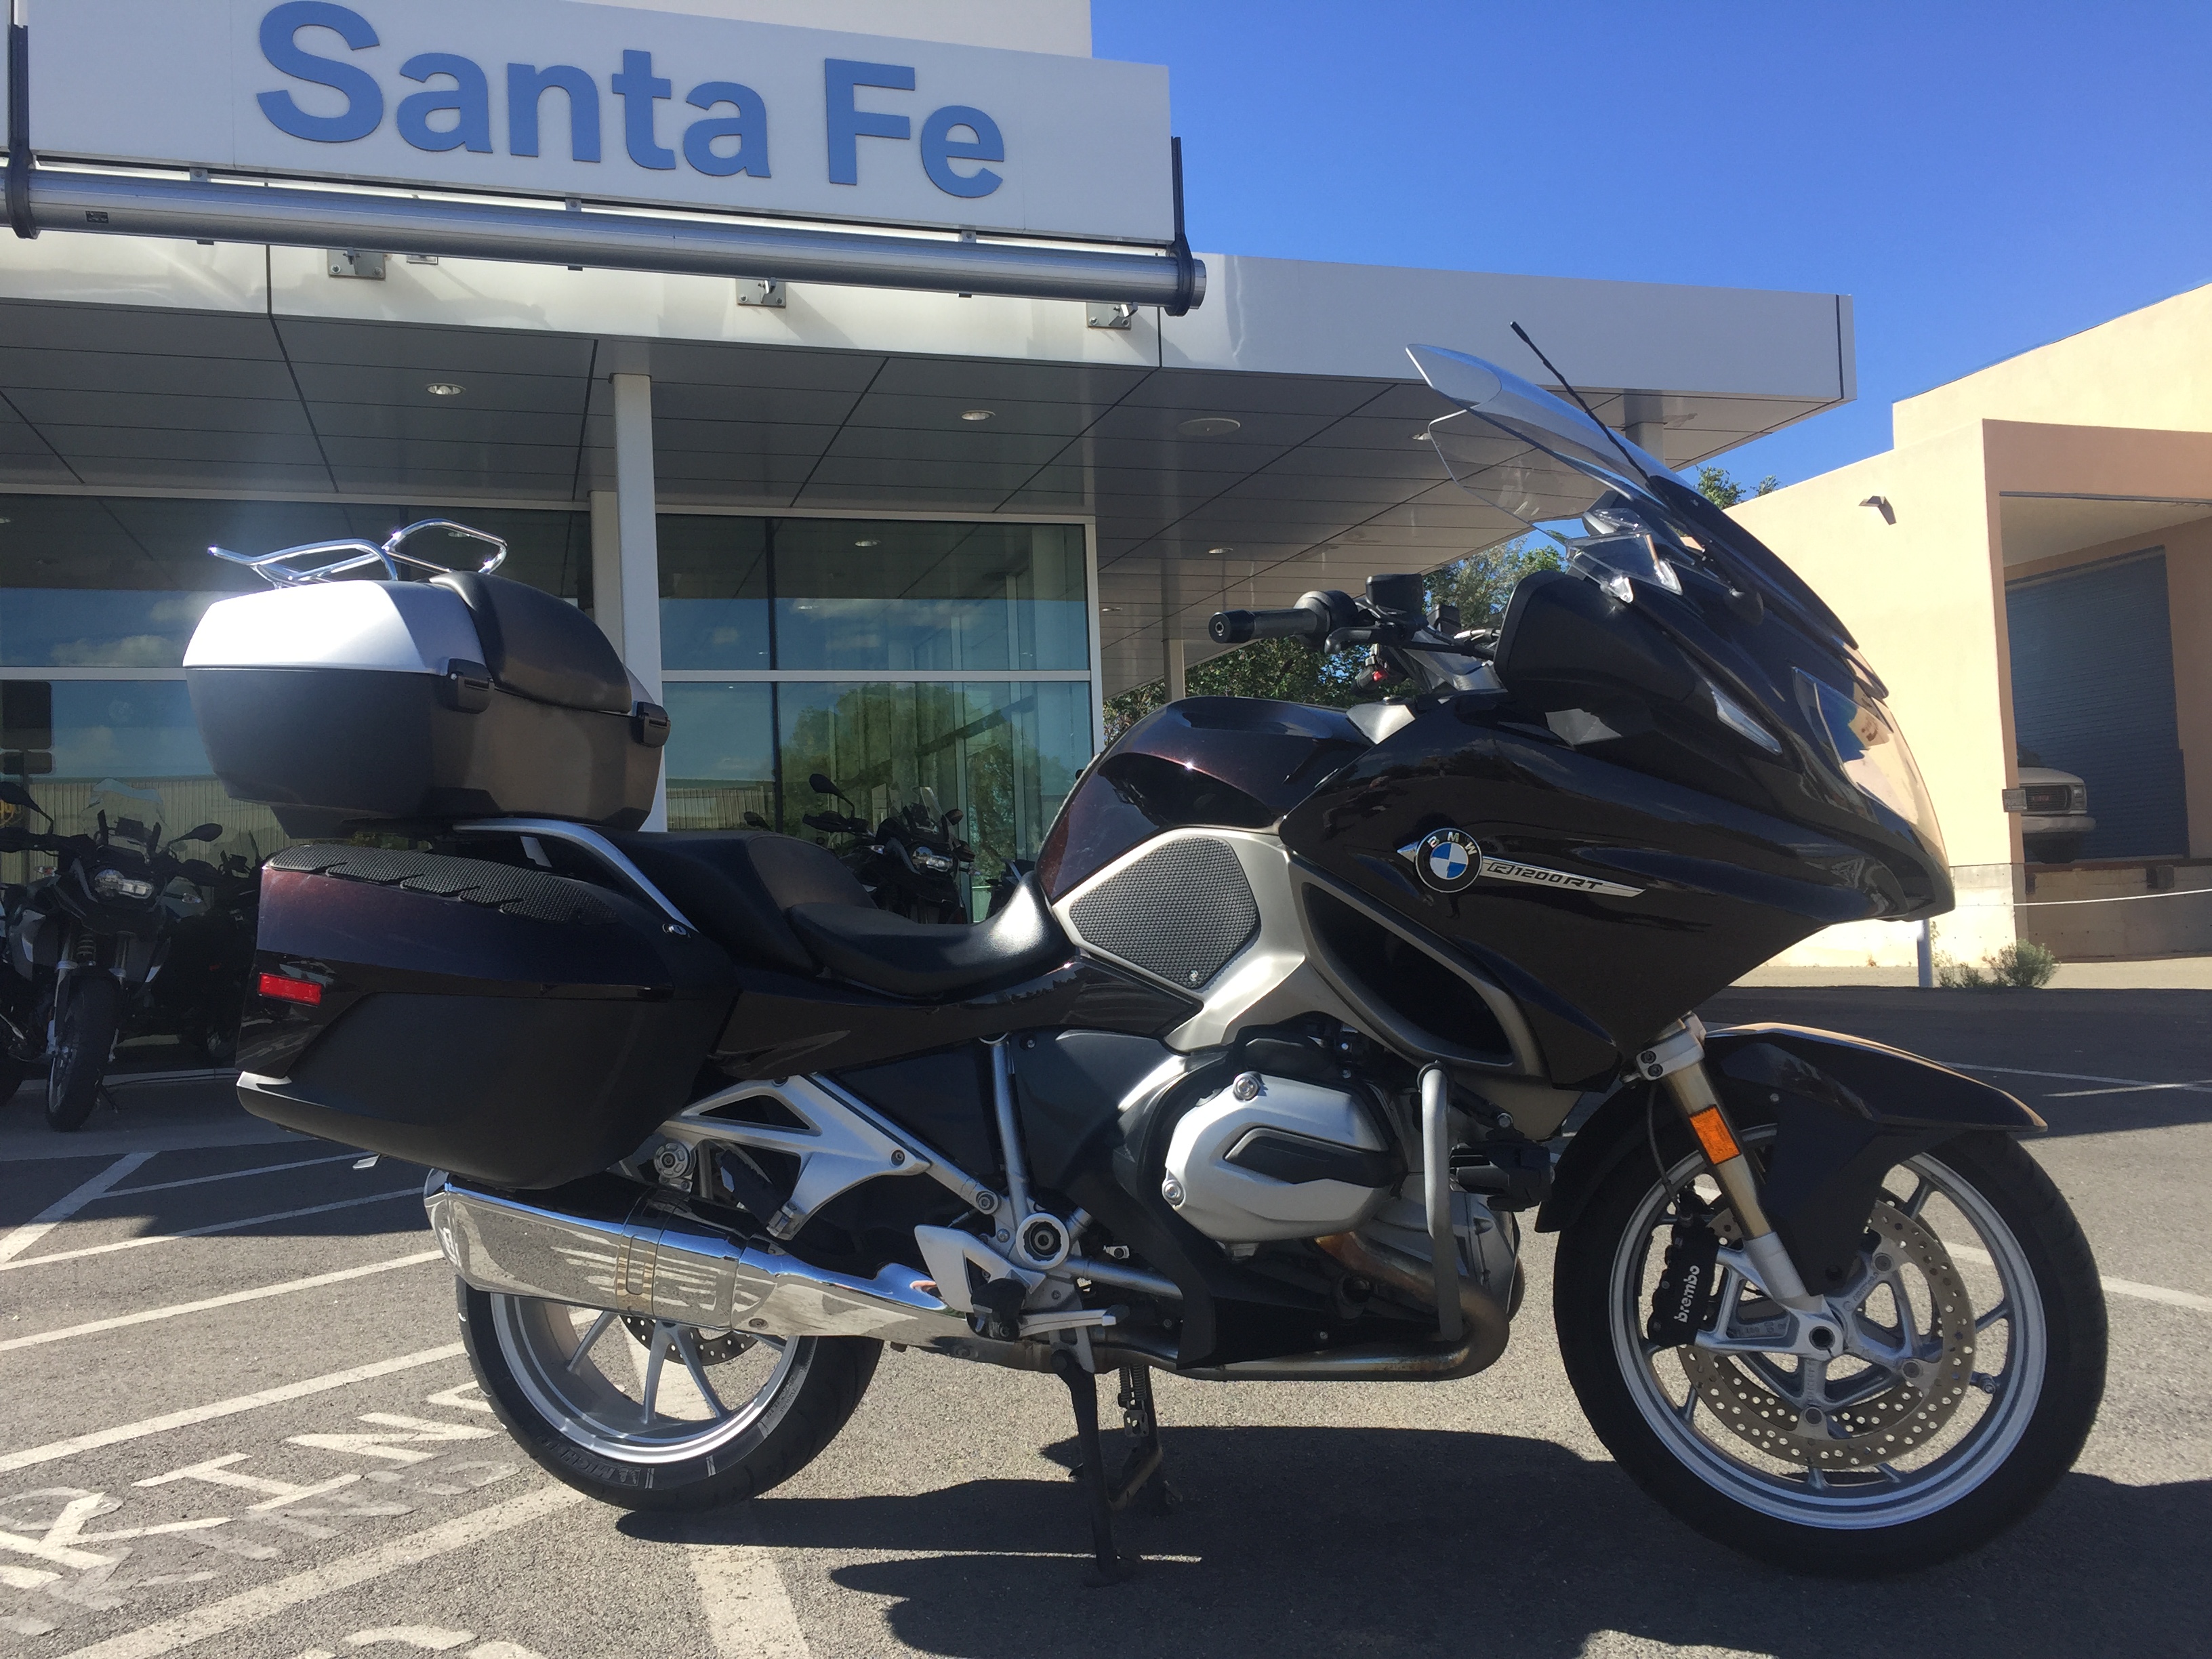 Pre-Owned Motorcycle Inventory - R1200RT - Santa Fe BMW Motorcycles - Santa Fe, NM.